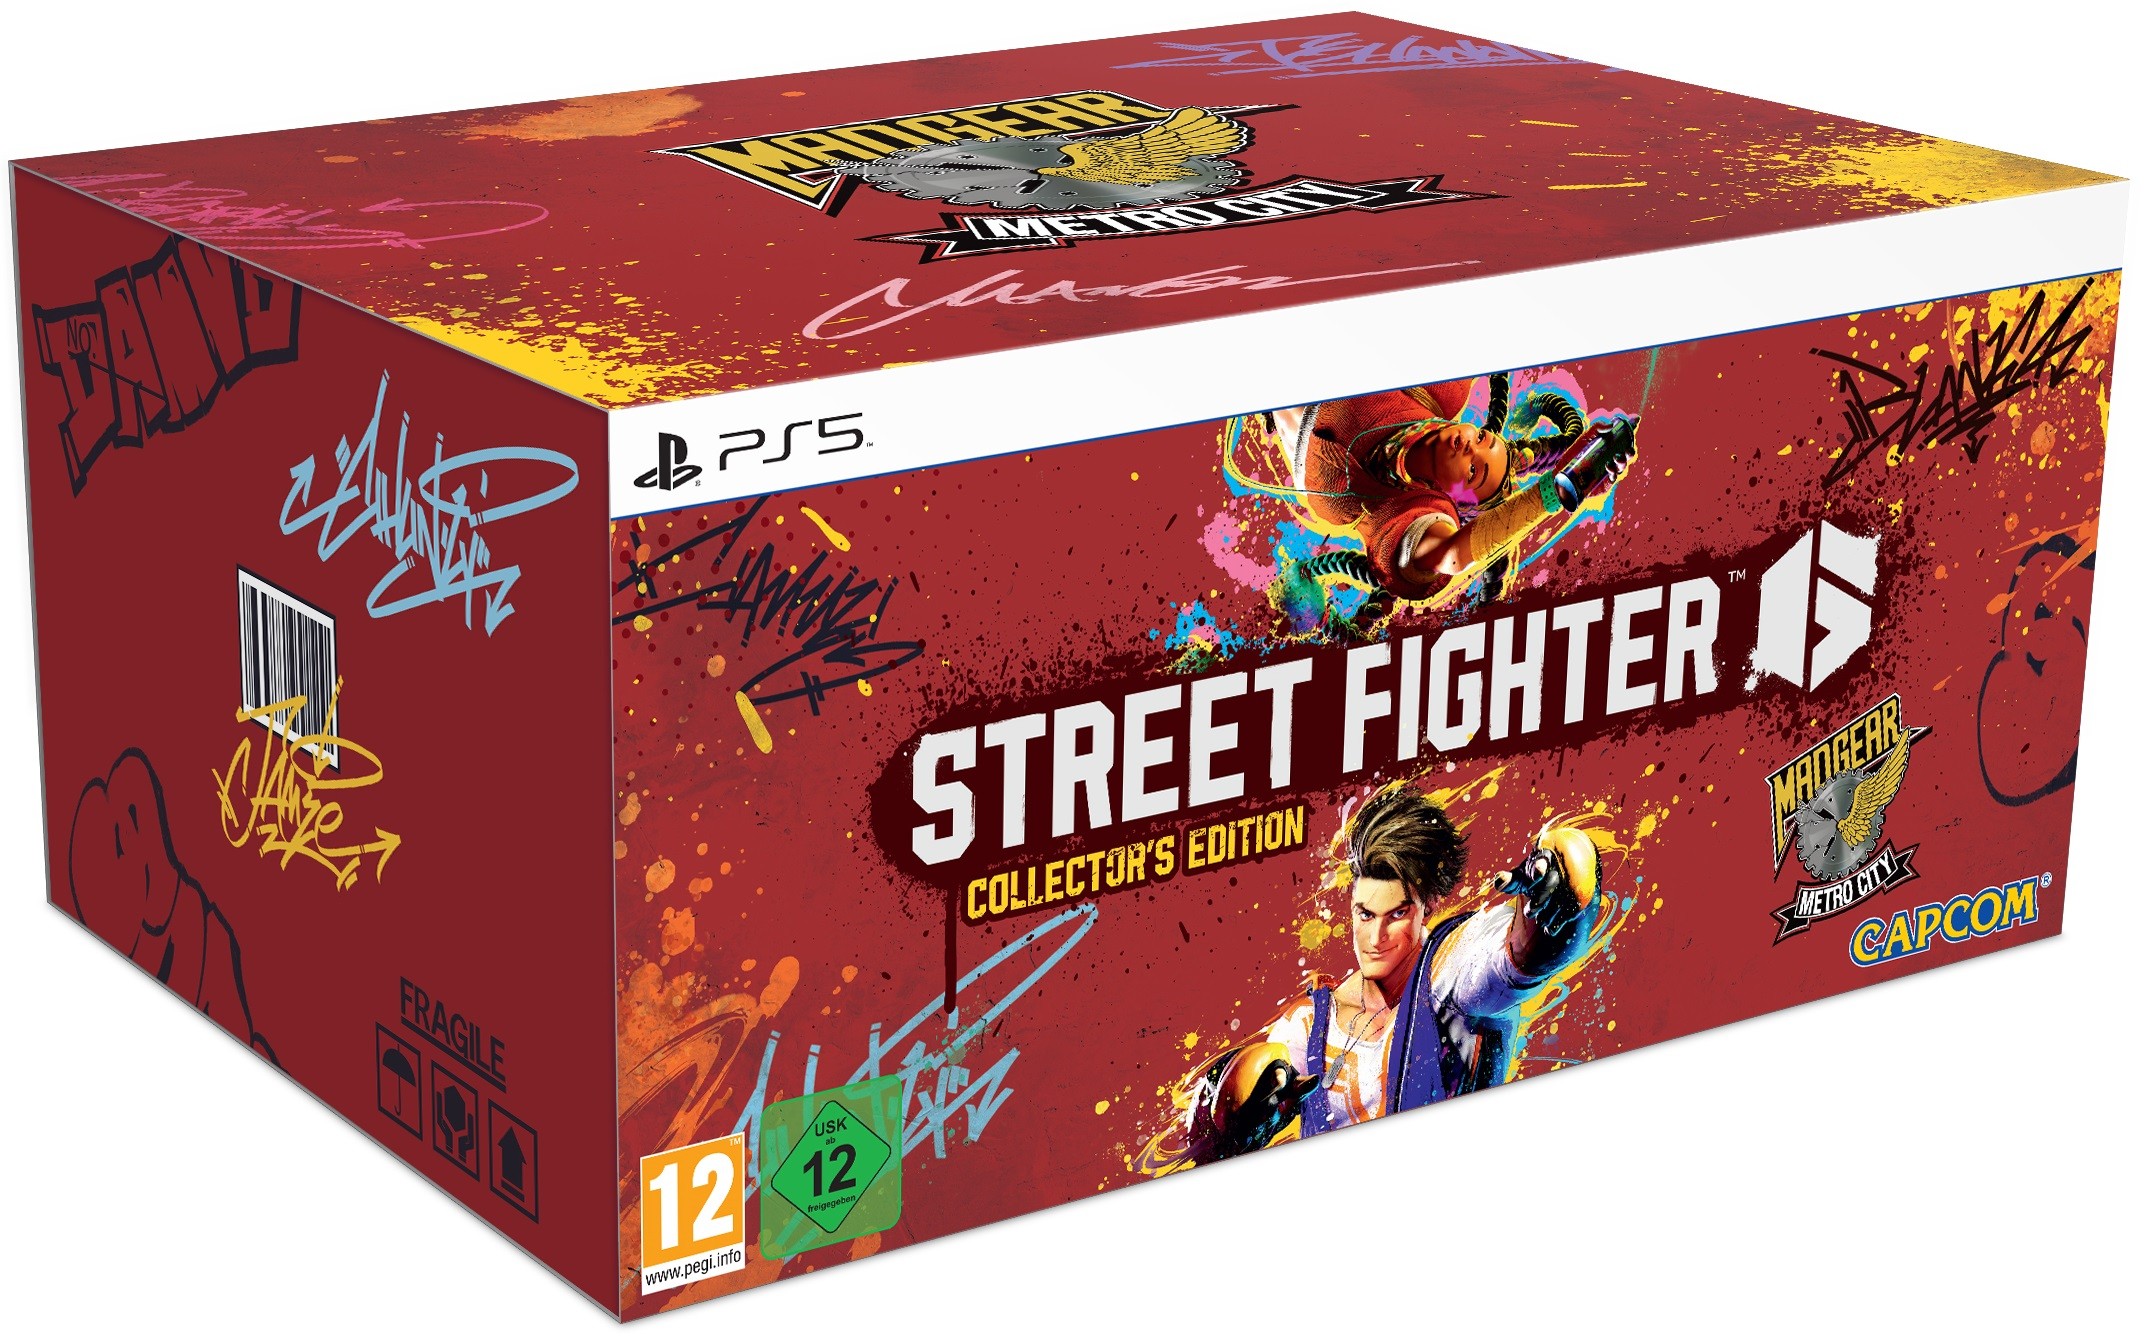 Street Fighter 6 - Mad Gear Box | Collectors Edition + Preorder Bonus